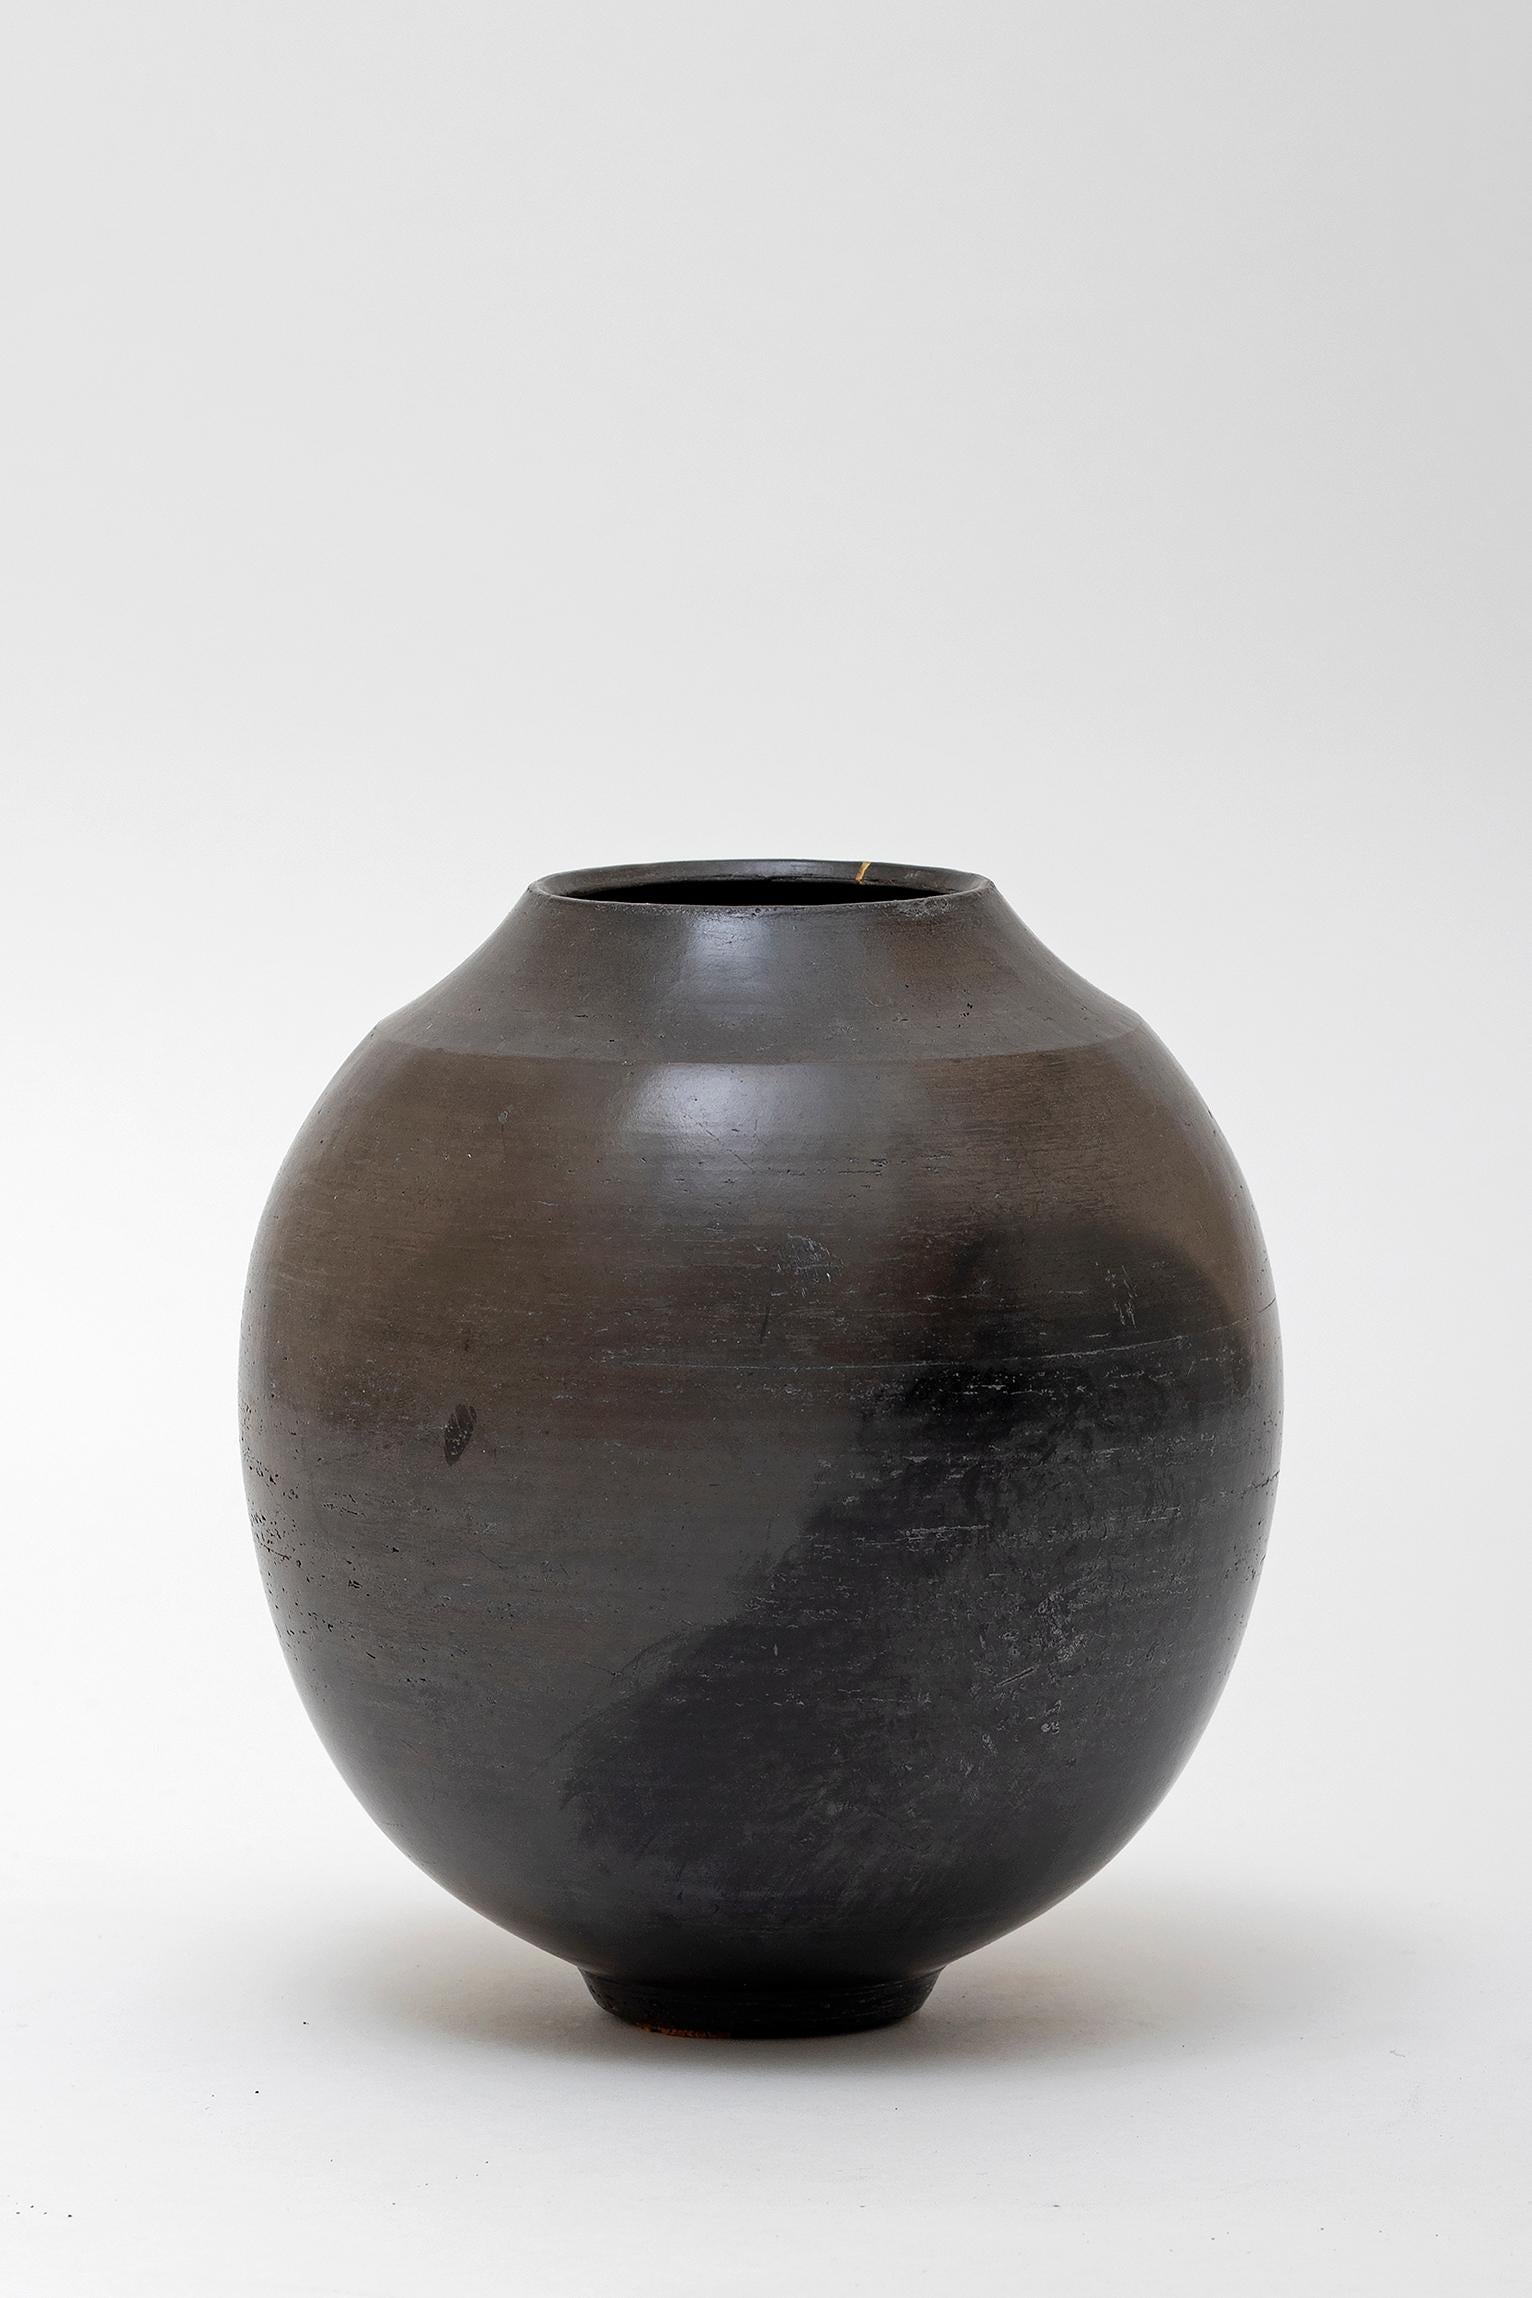 Gold Kintsugi Ceramic Vase by Karen Swami